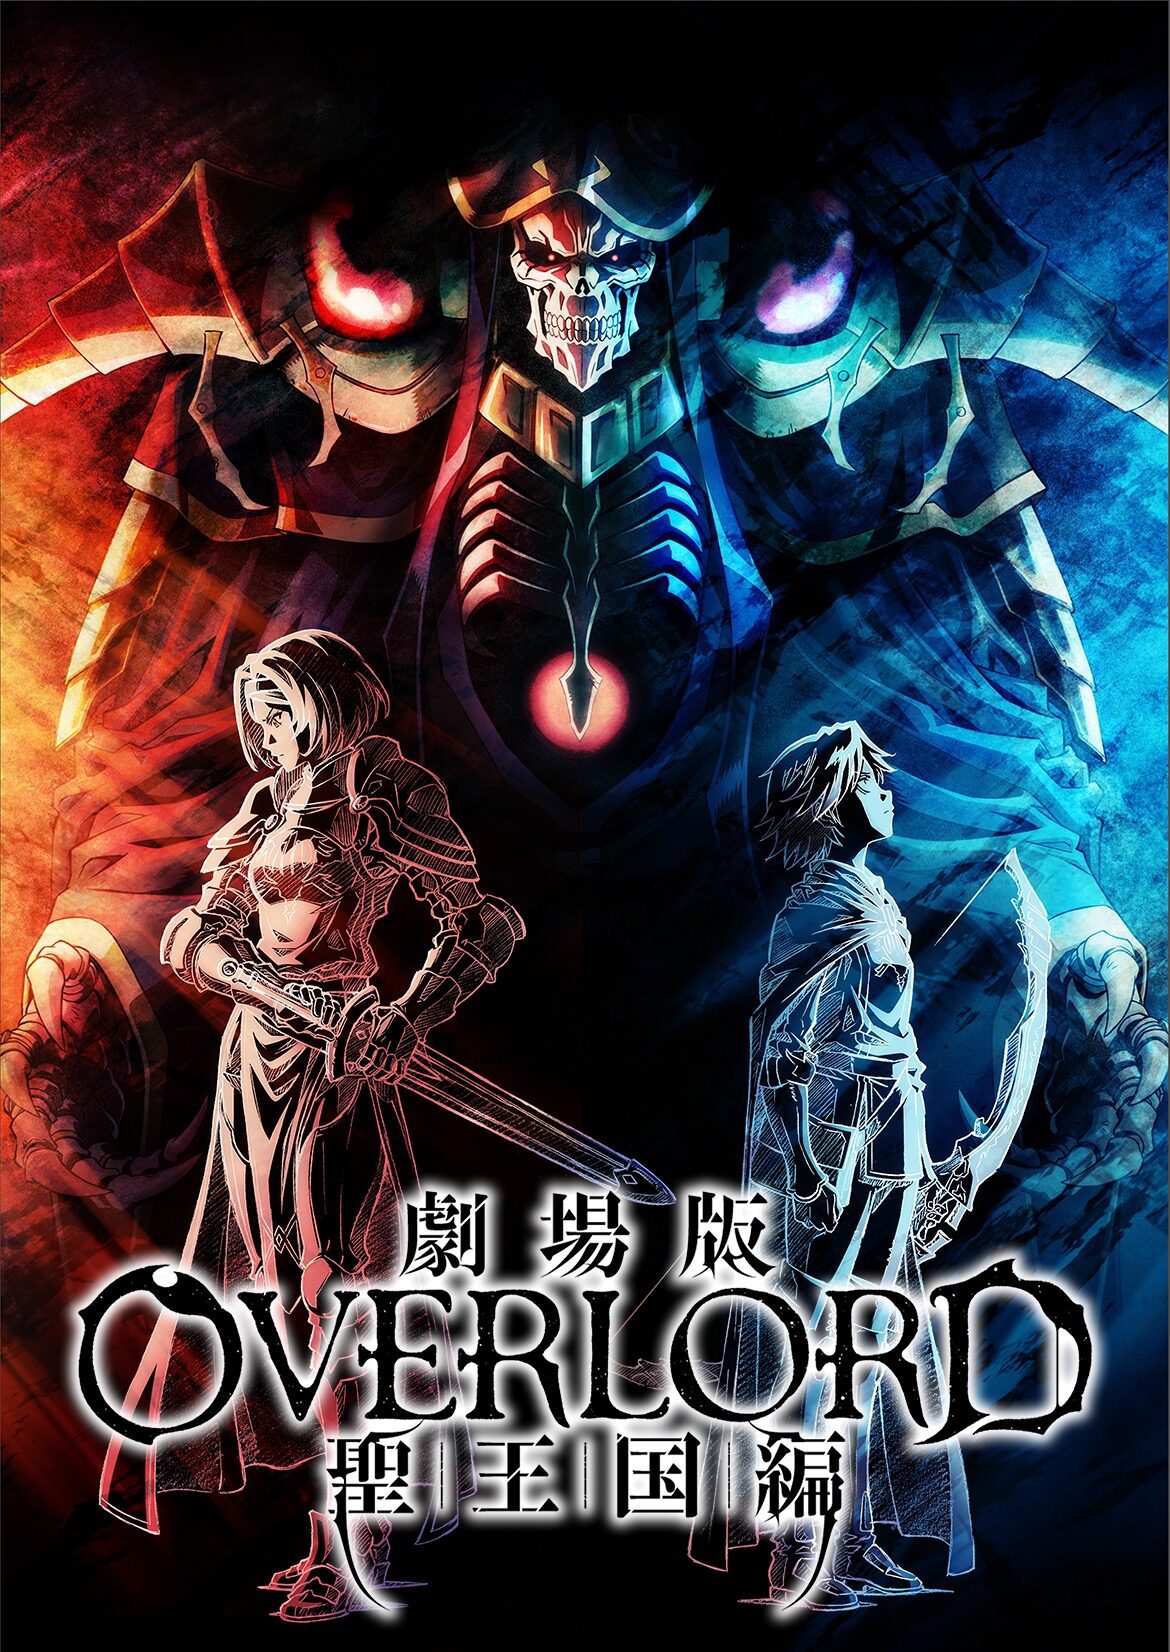 Overlord anime film key visual